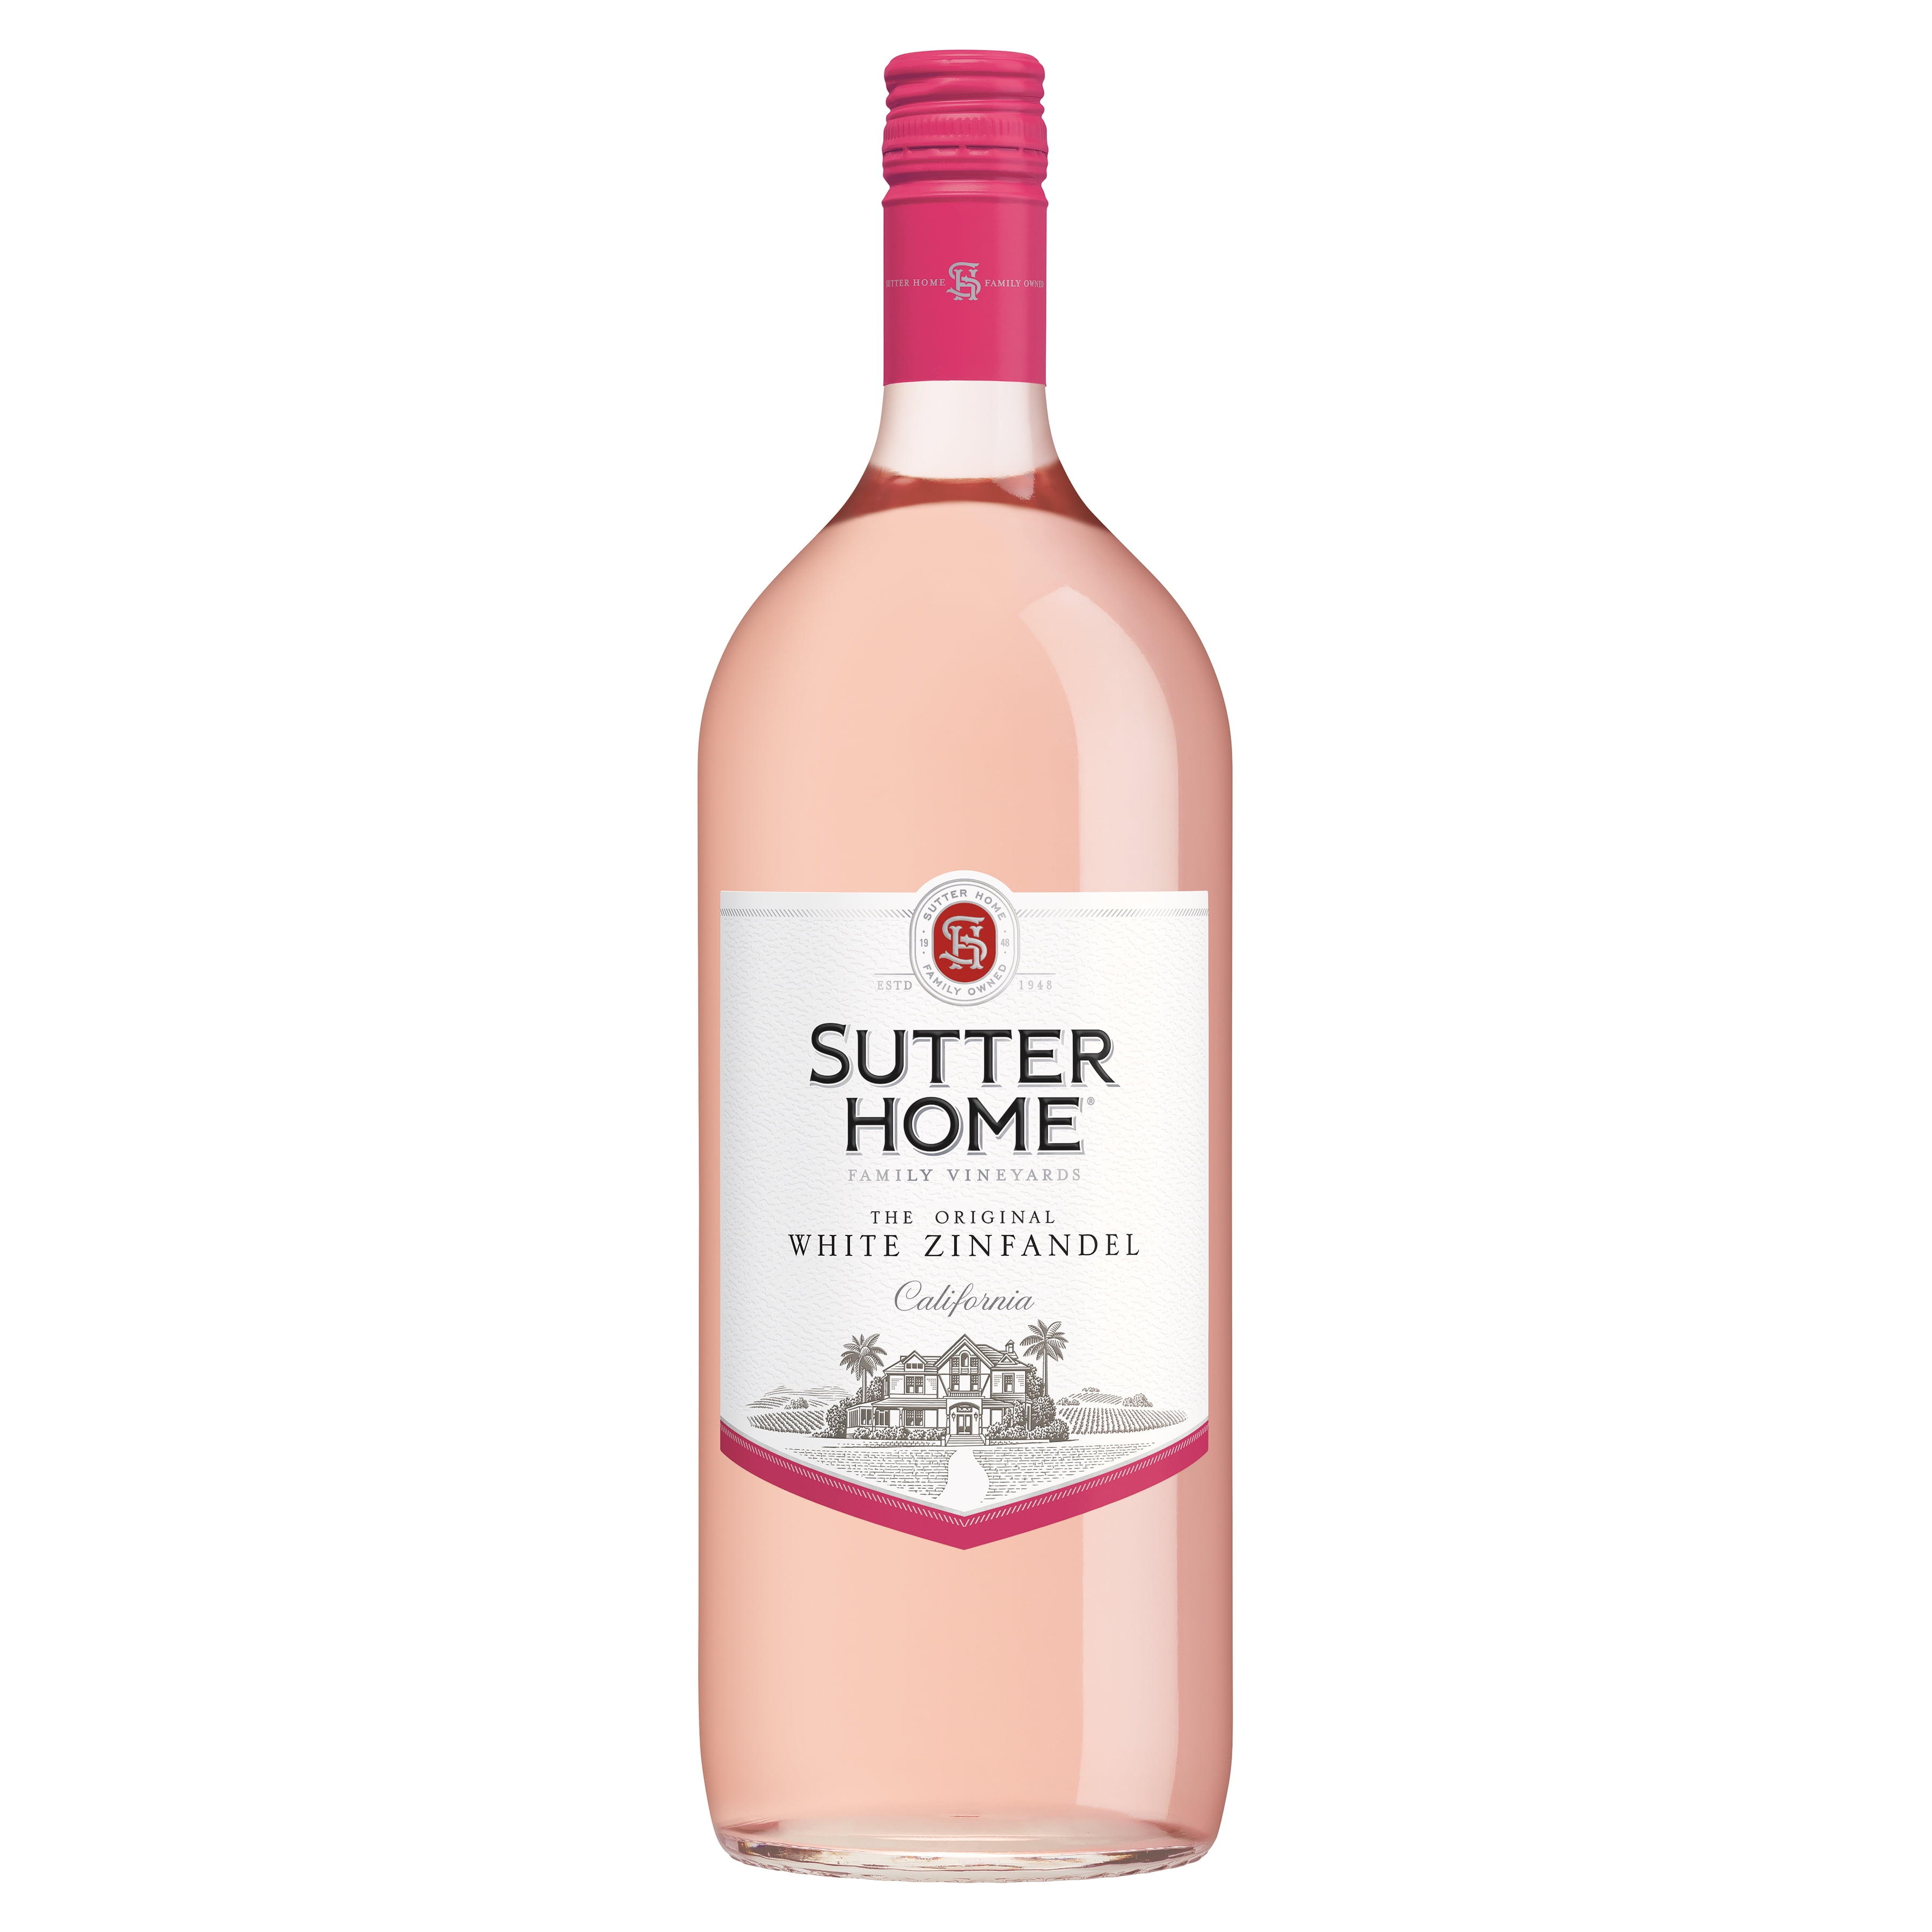 Sutter Home White Zinfandel 1.5L Wine Bottle - Walmart.com